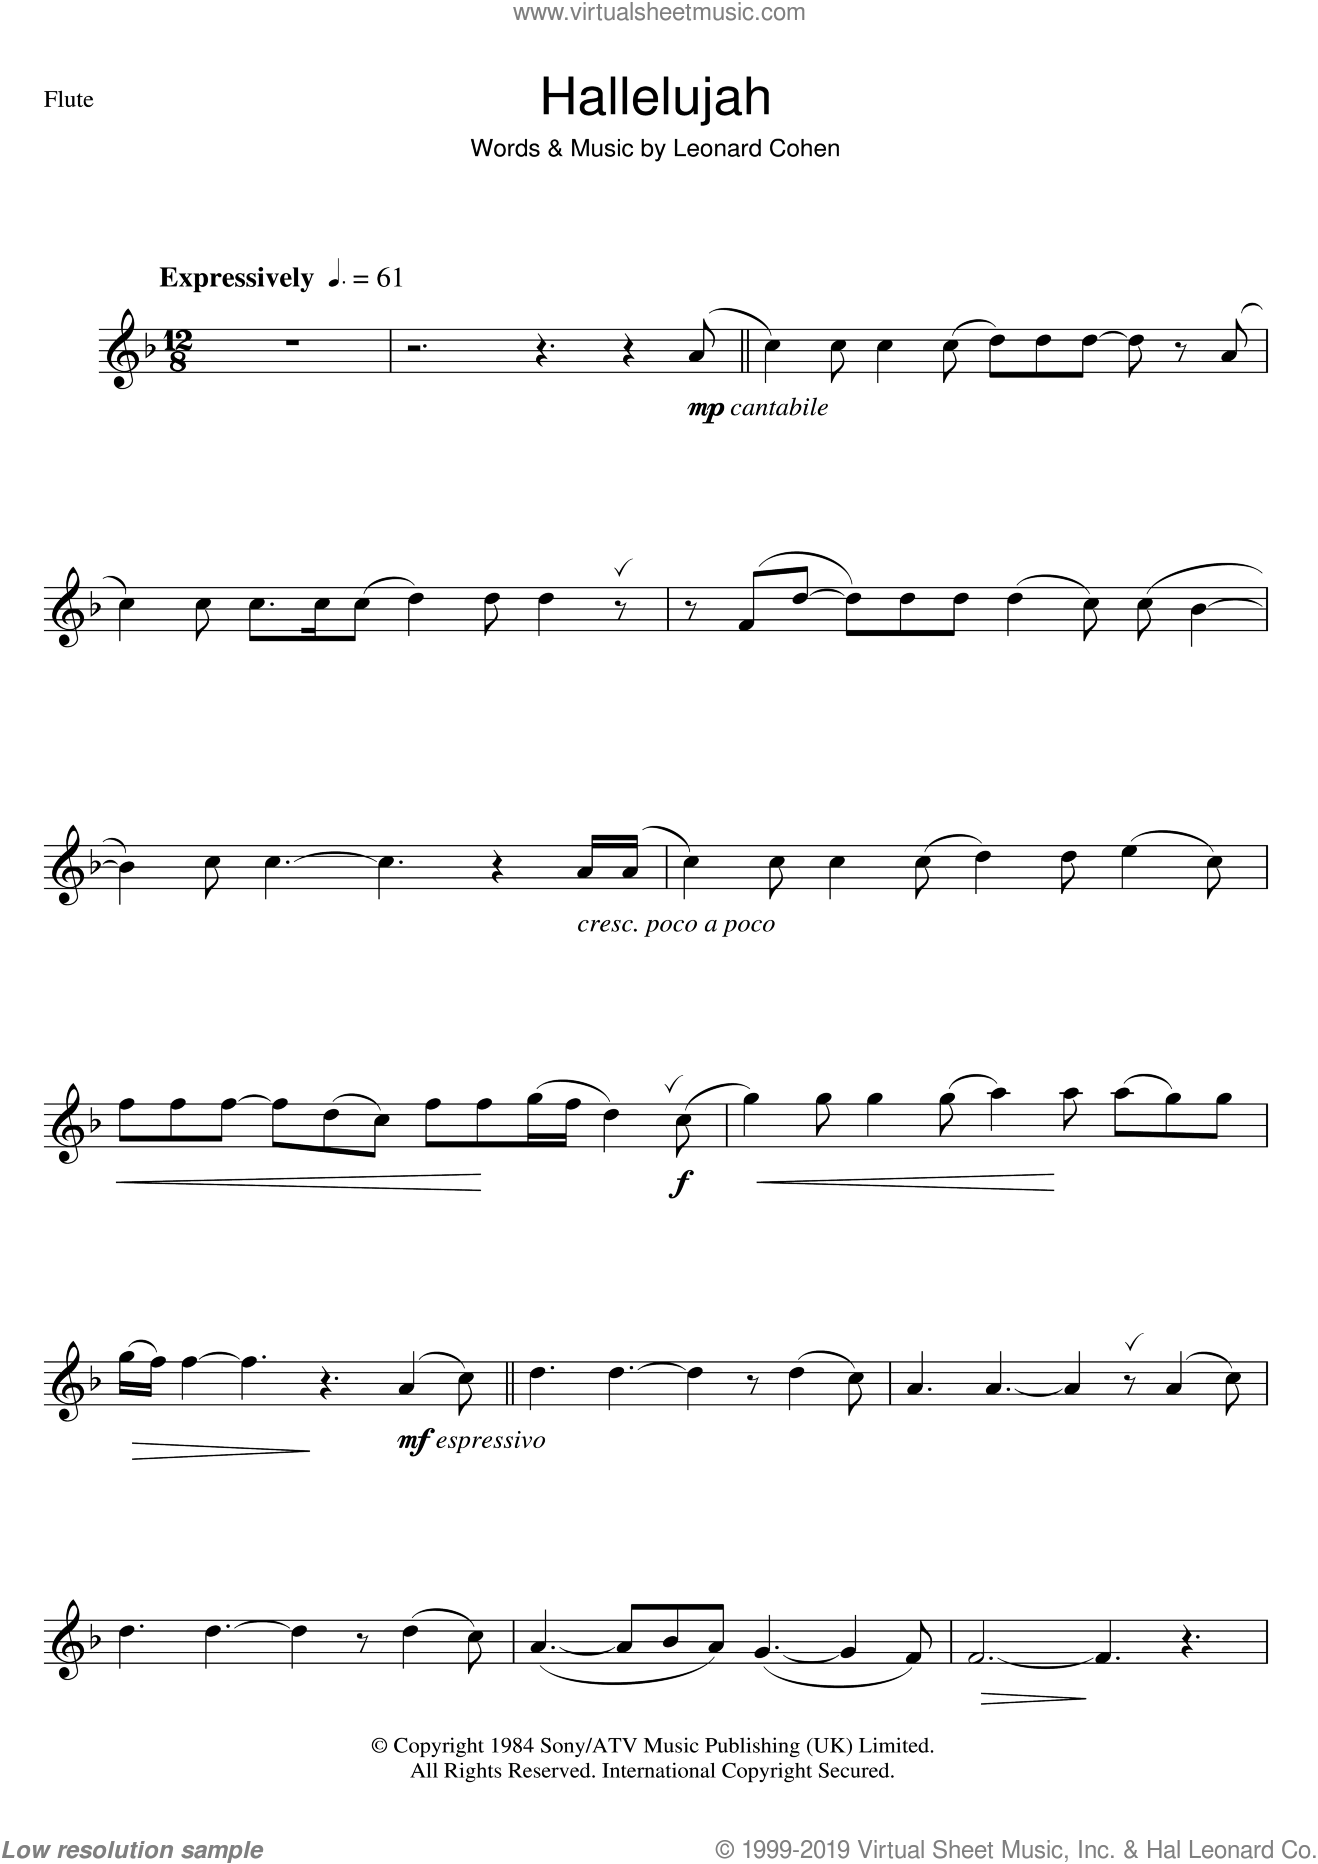 dutilleux flute sonatina imslp